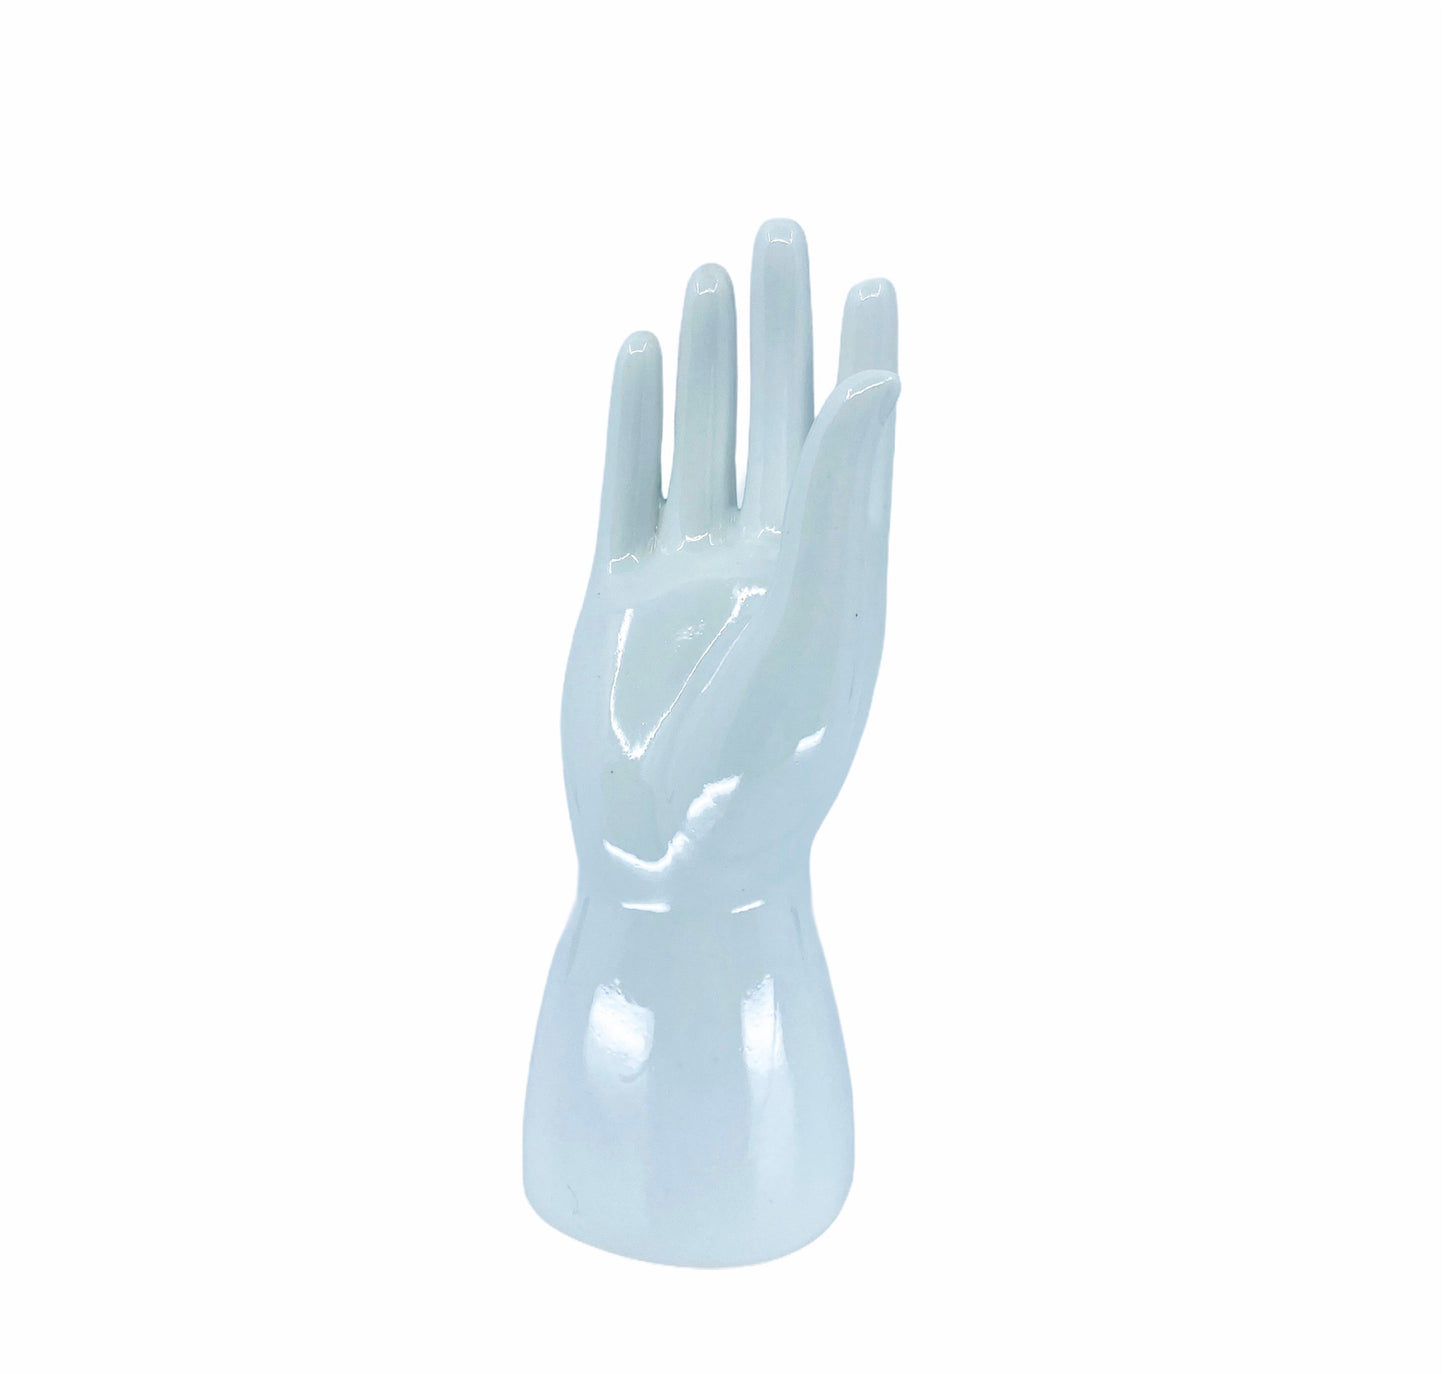 Vintage White Ceramic Hand